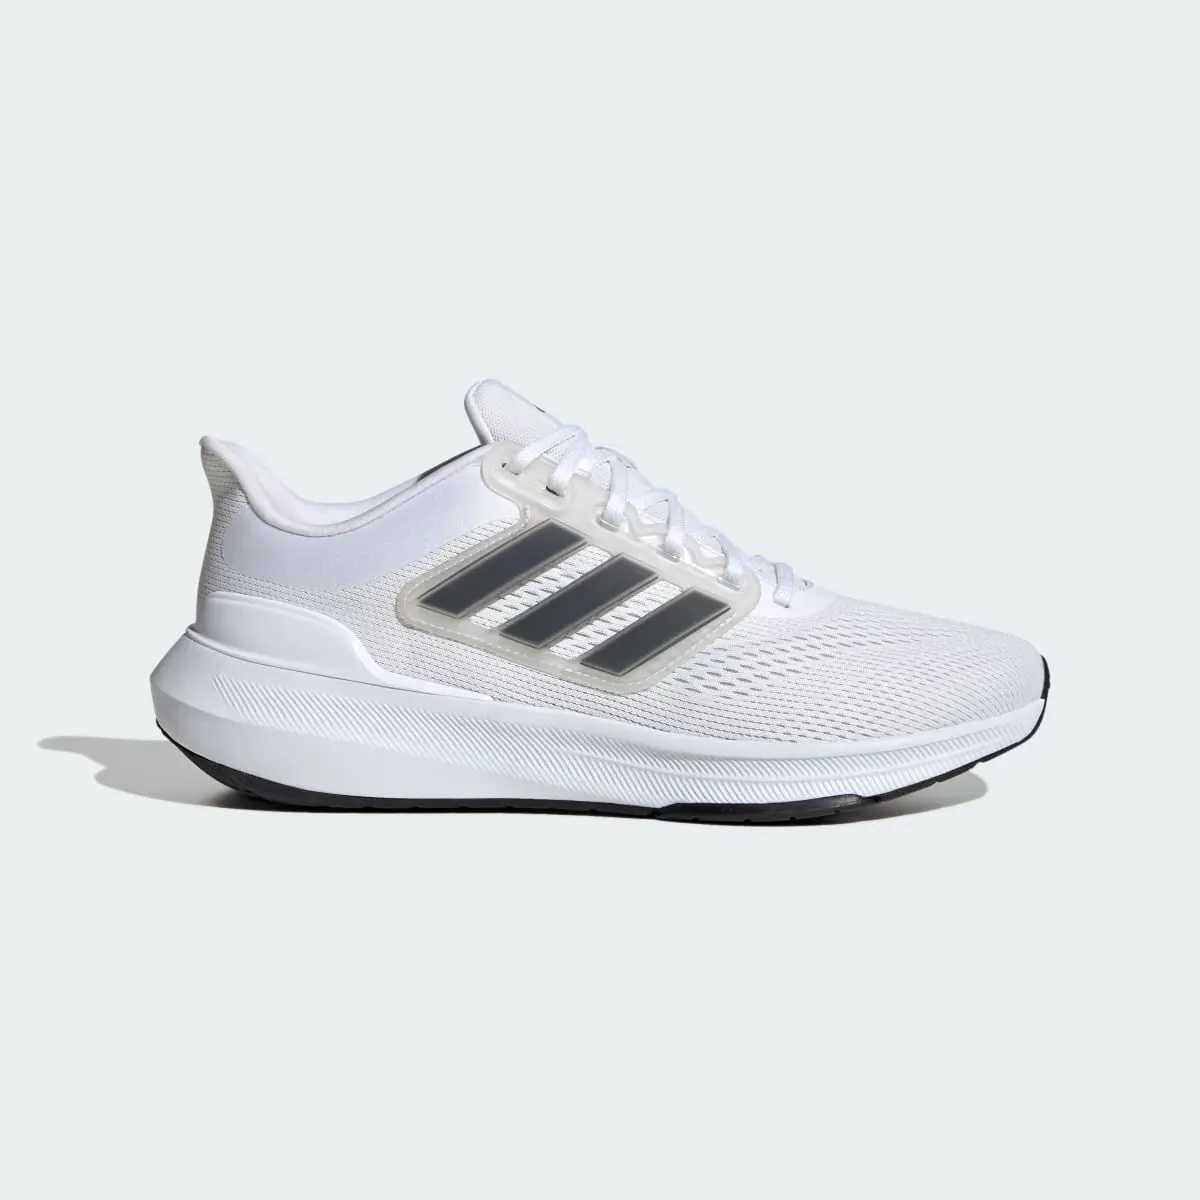 Adidas Ultrabounce Running Shoes. 2